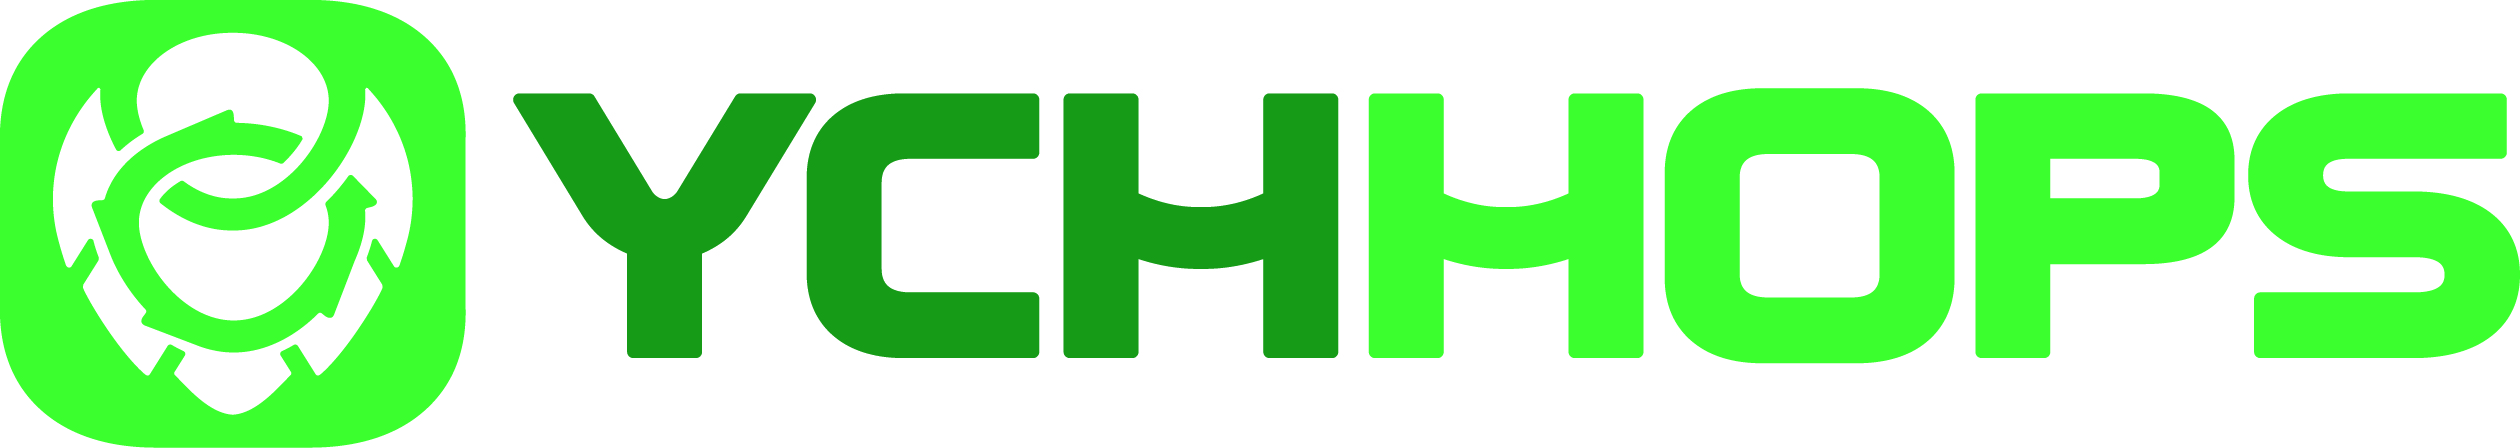 YCHHOPS Logo.jpg